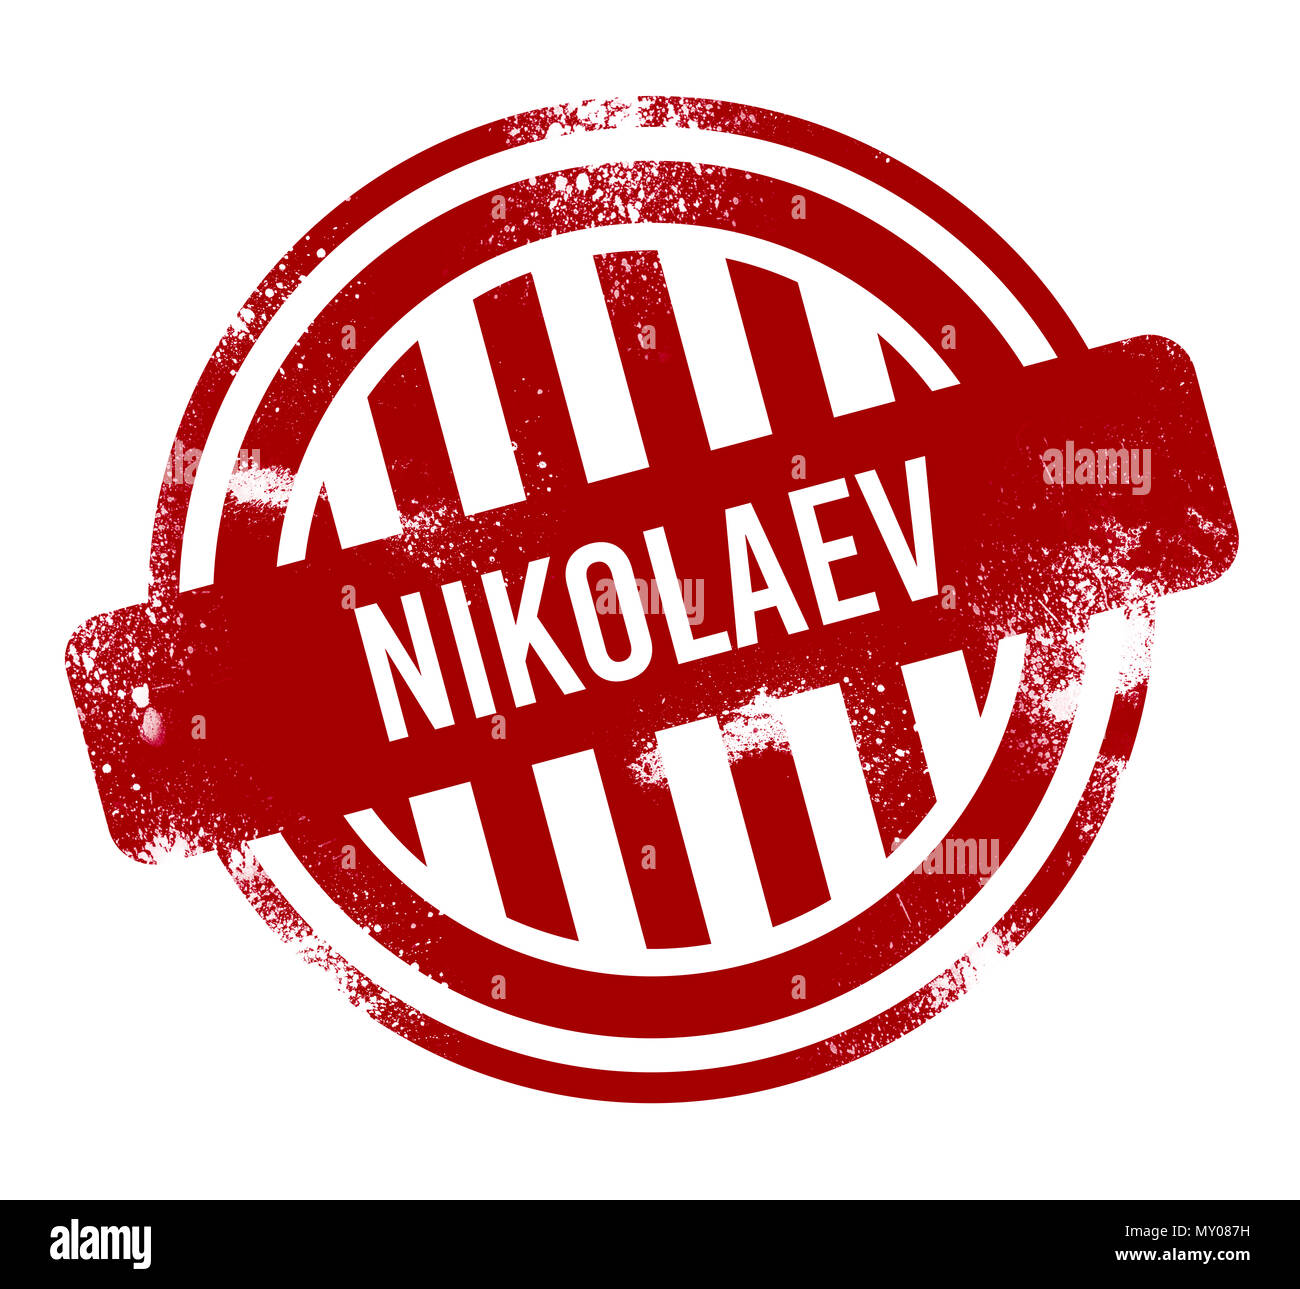 Nikolaev - Red grunge button, stamp Stock Photo